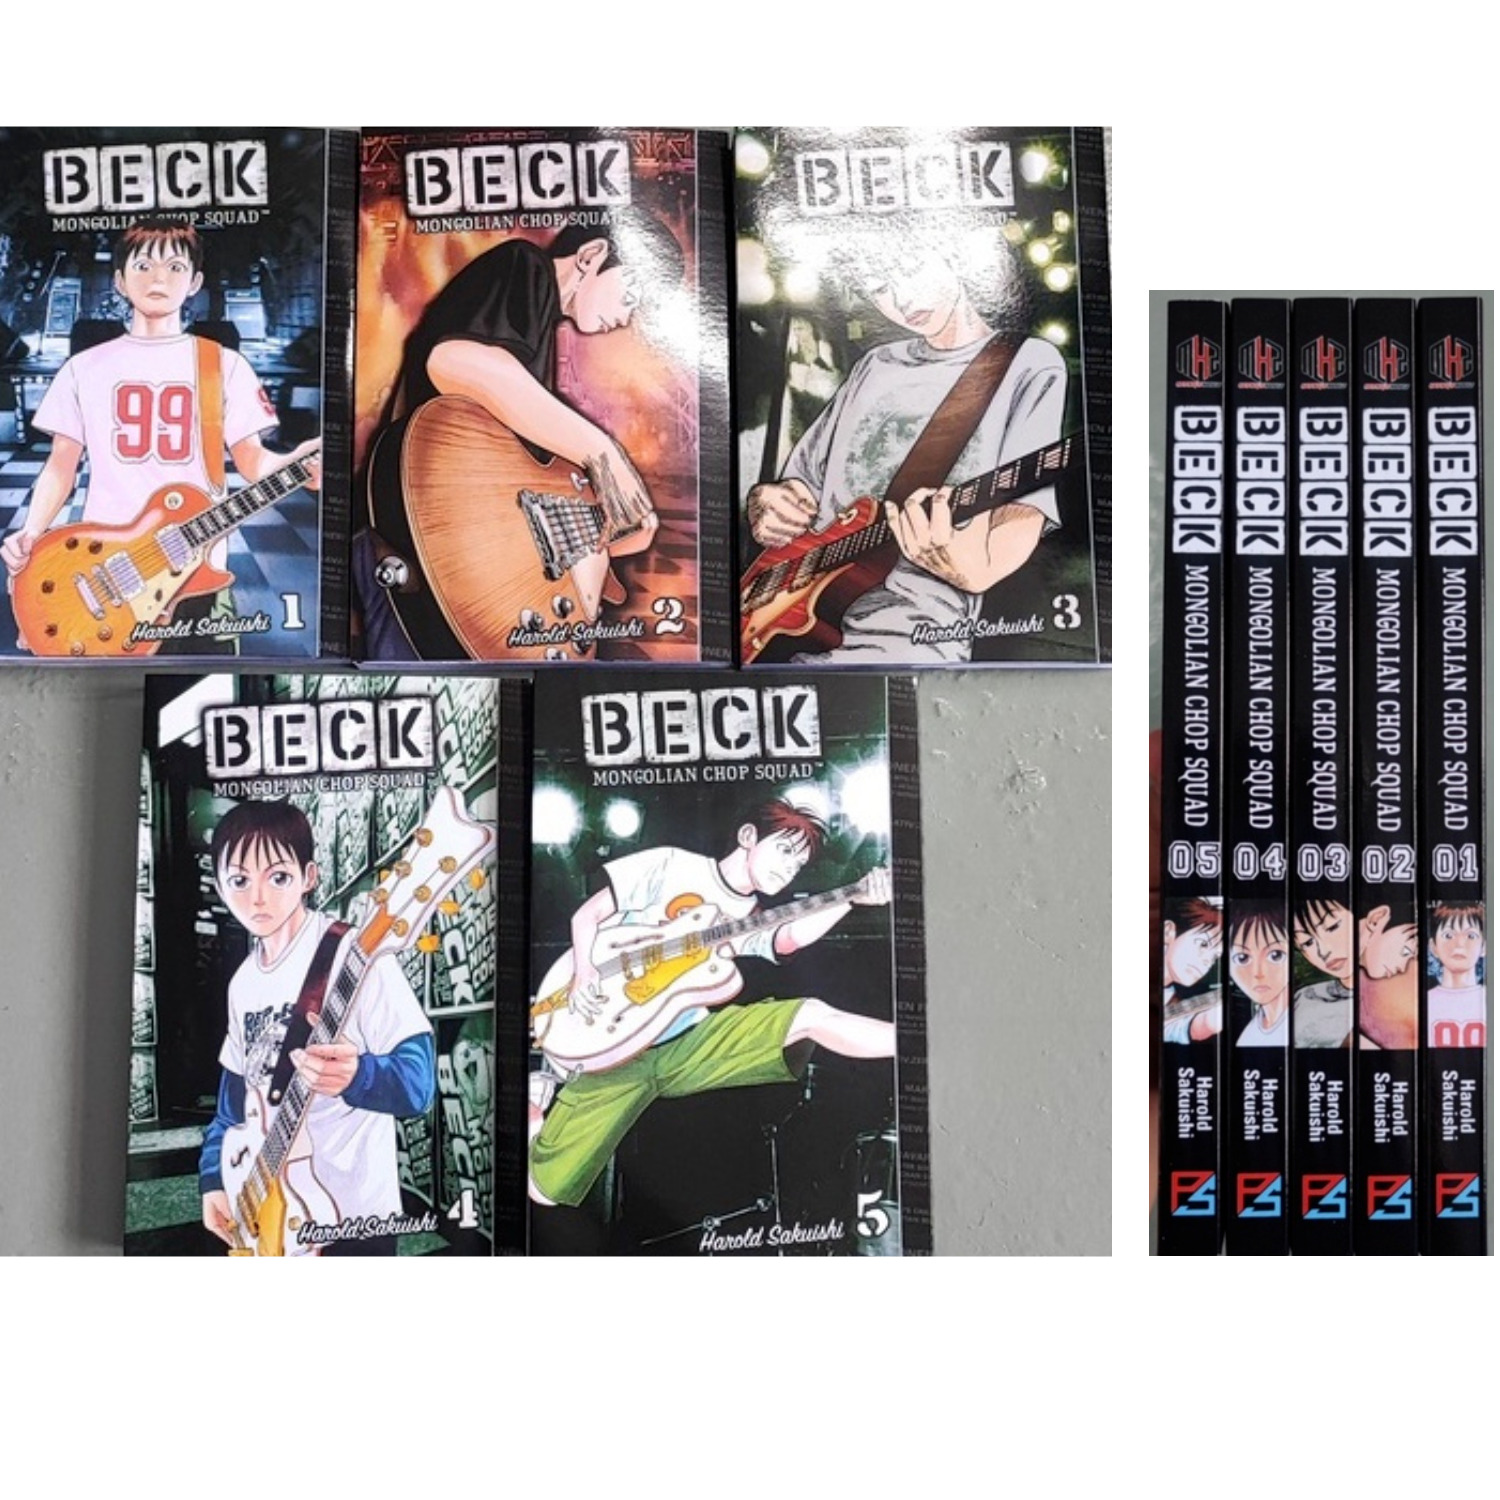 BECK MONGOLIAN CHOP SQUAD (ENGLISH Version) Vol 1-5 Full Set Manga Anime DHL